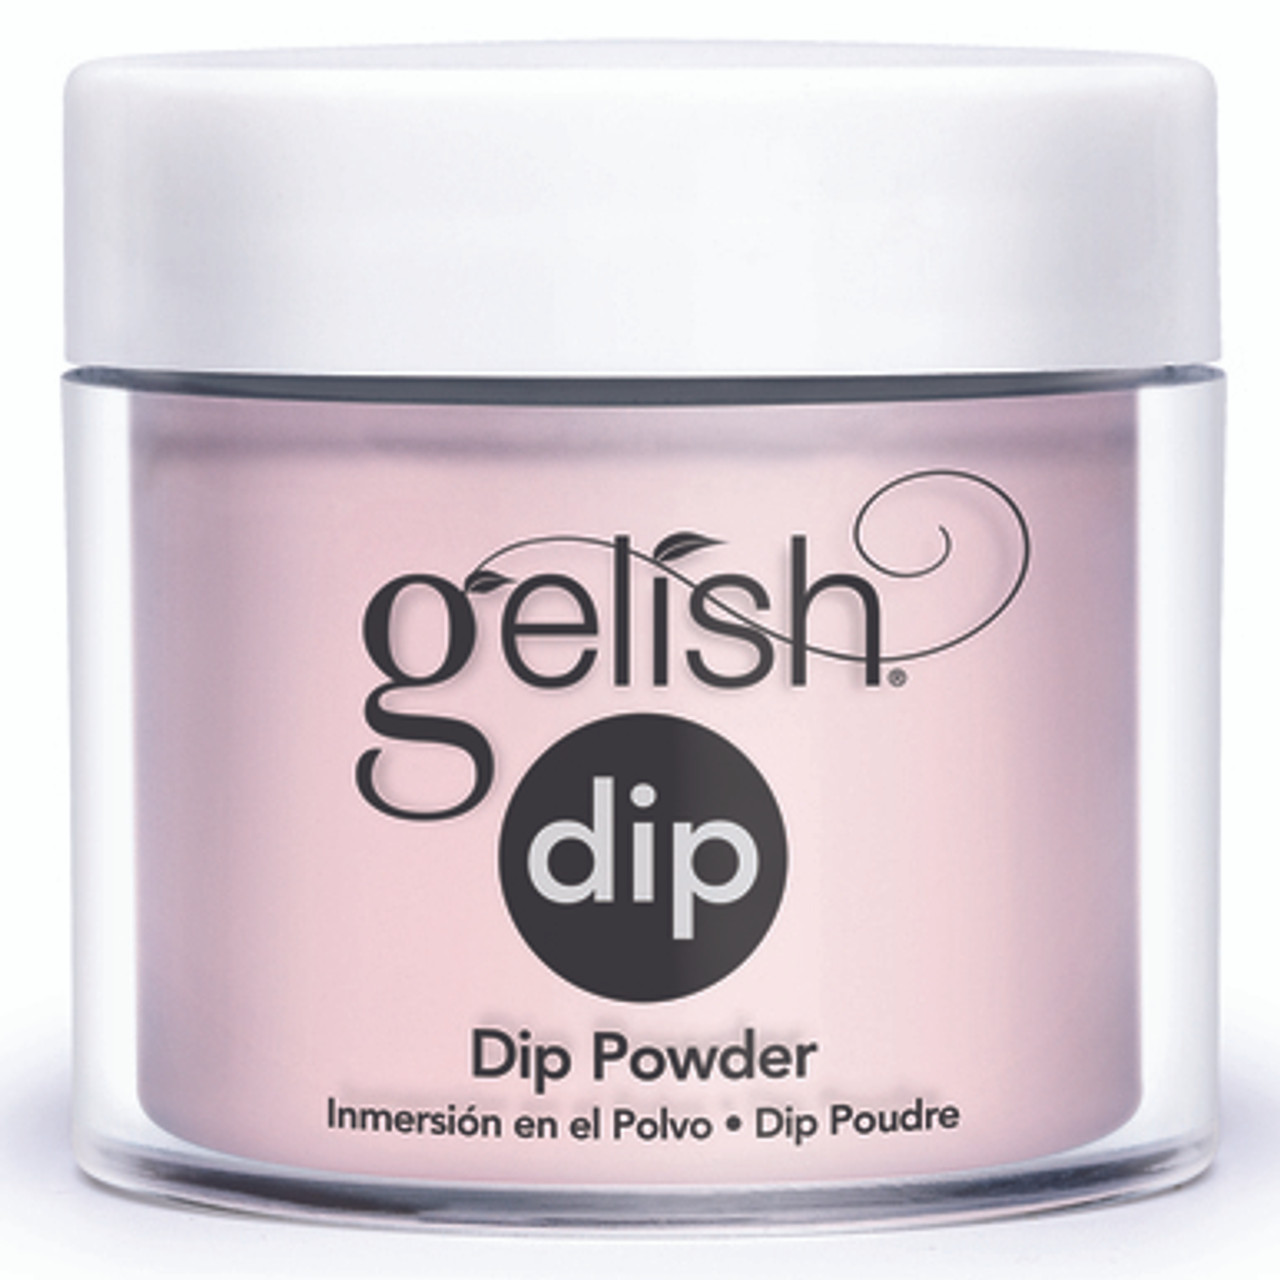 Gelish Dip Powder All About The Pout - 0.8 oz / 23 g